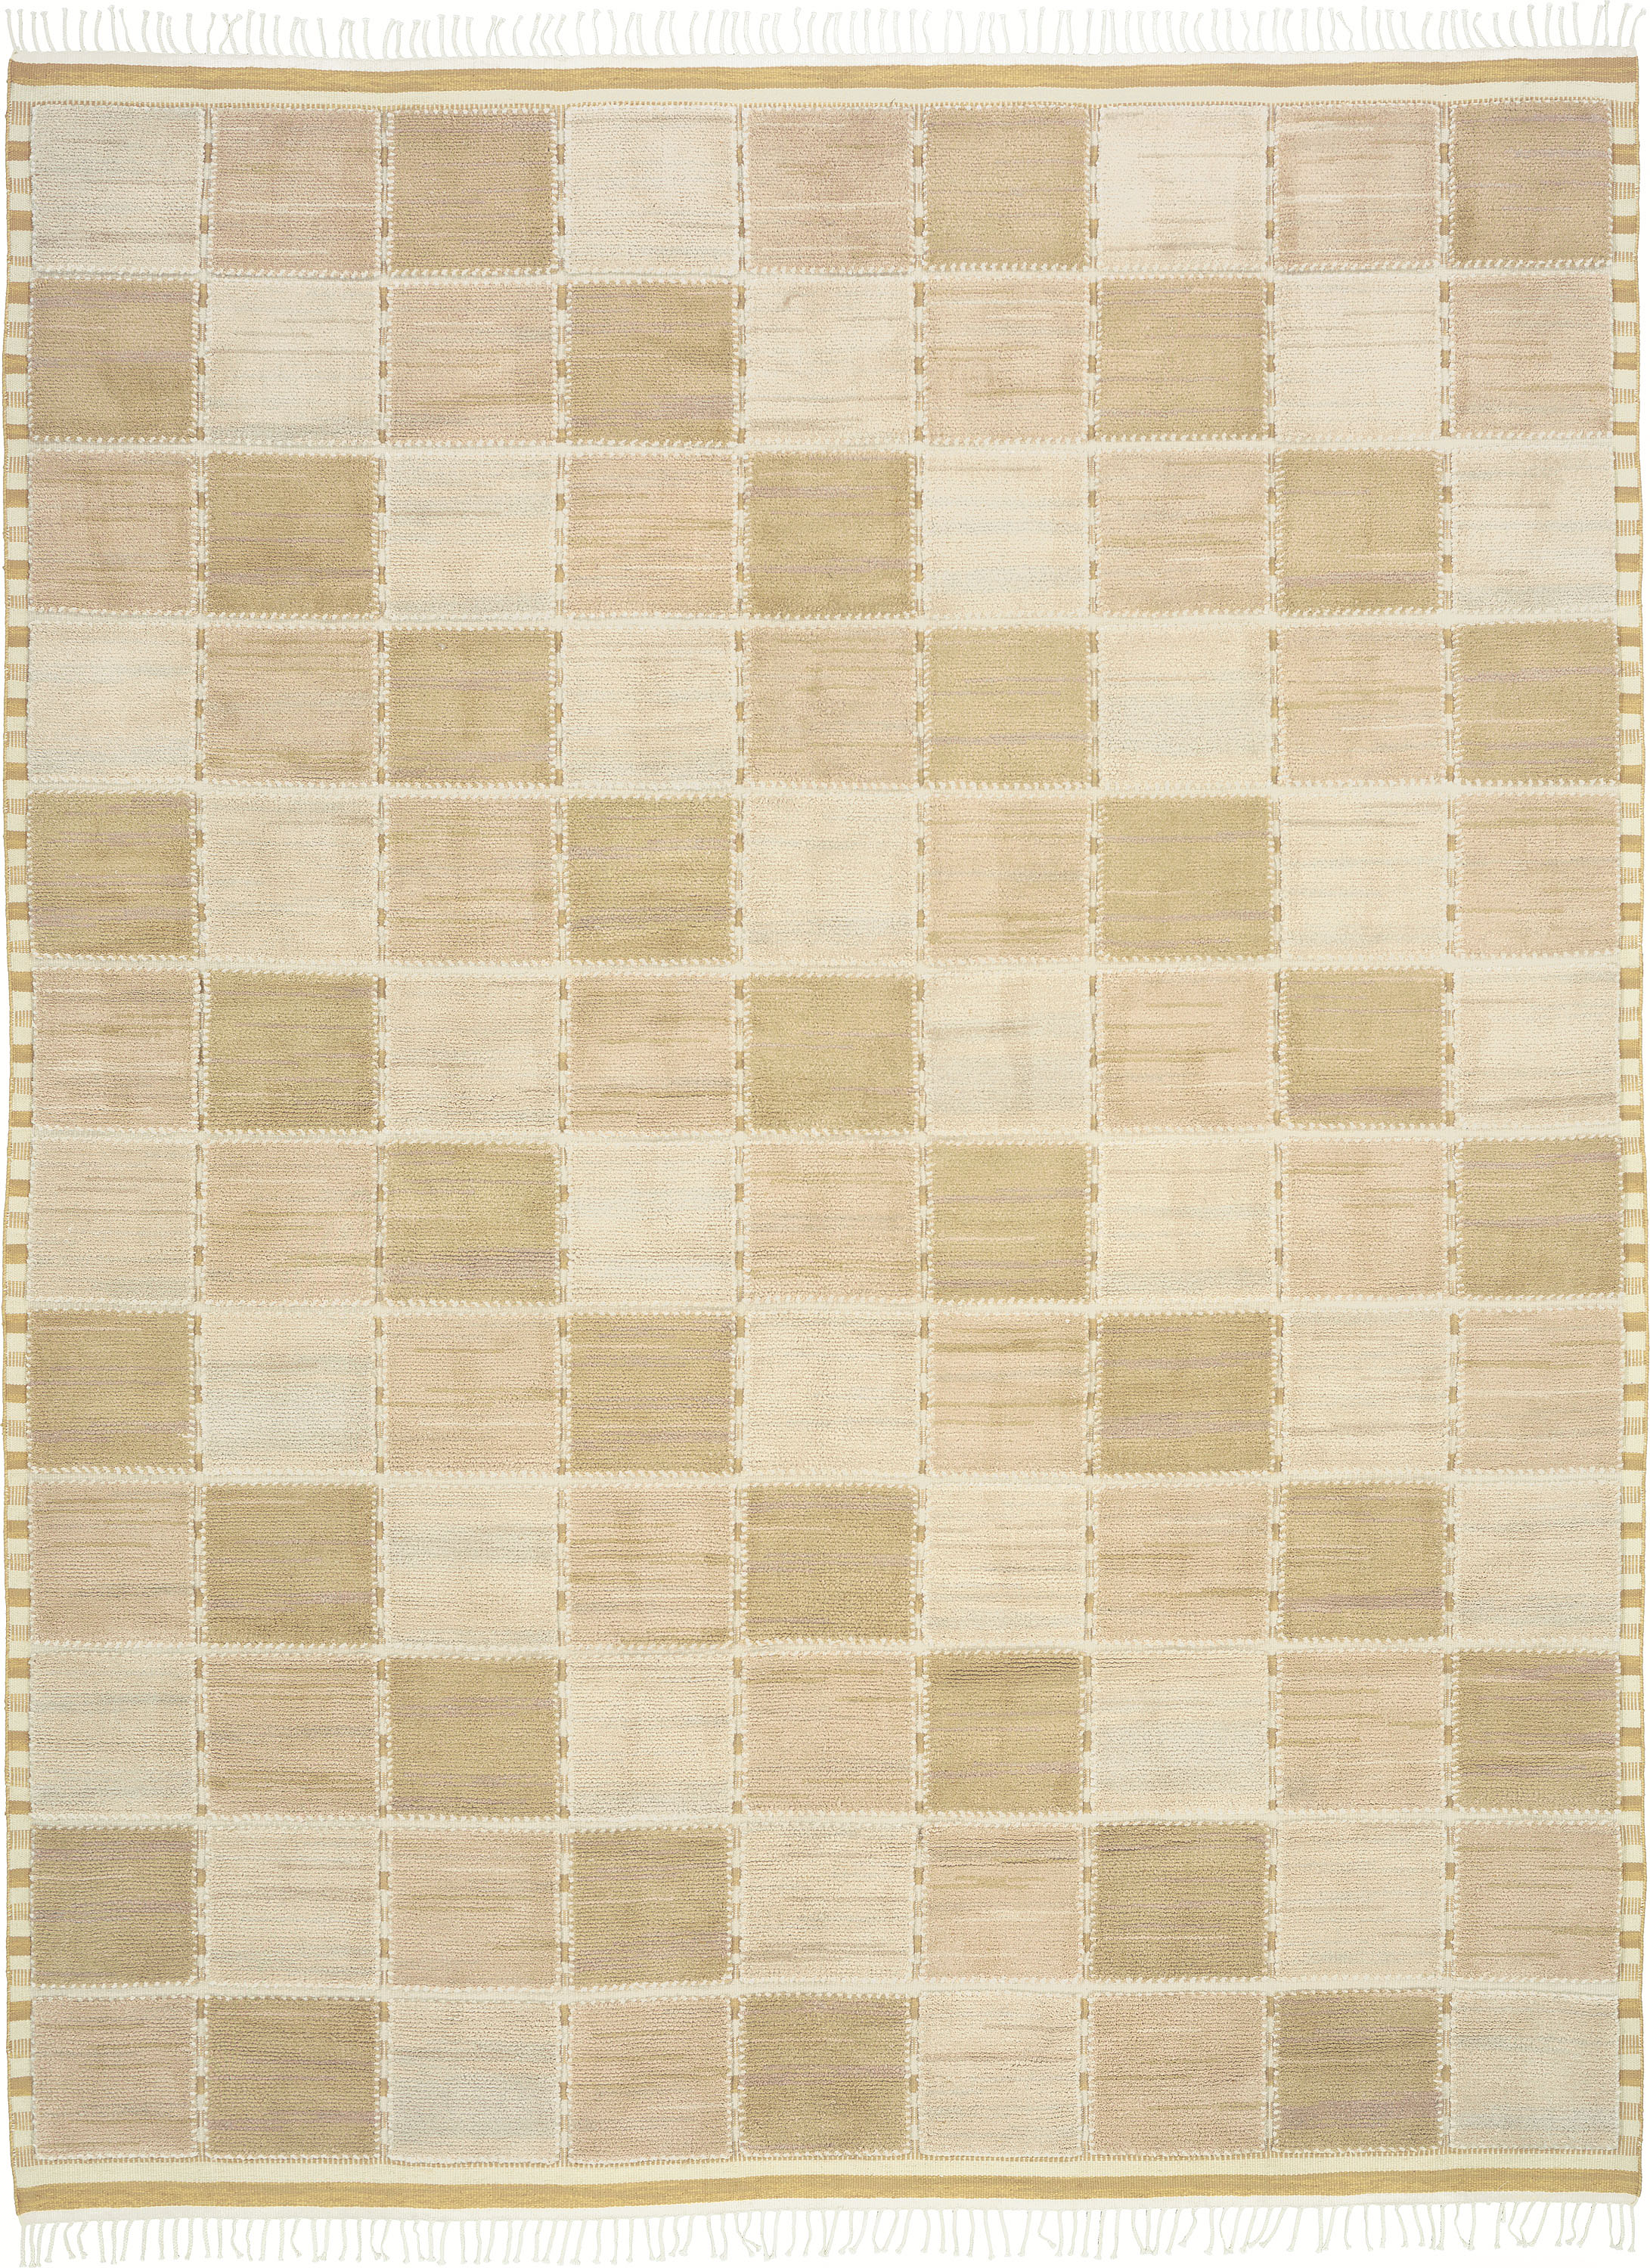 Sandstone Design | Custom Swedish Pile and Flat Weave Carpet | FJ Hakimian | Carpet Gallery in NY